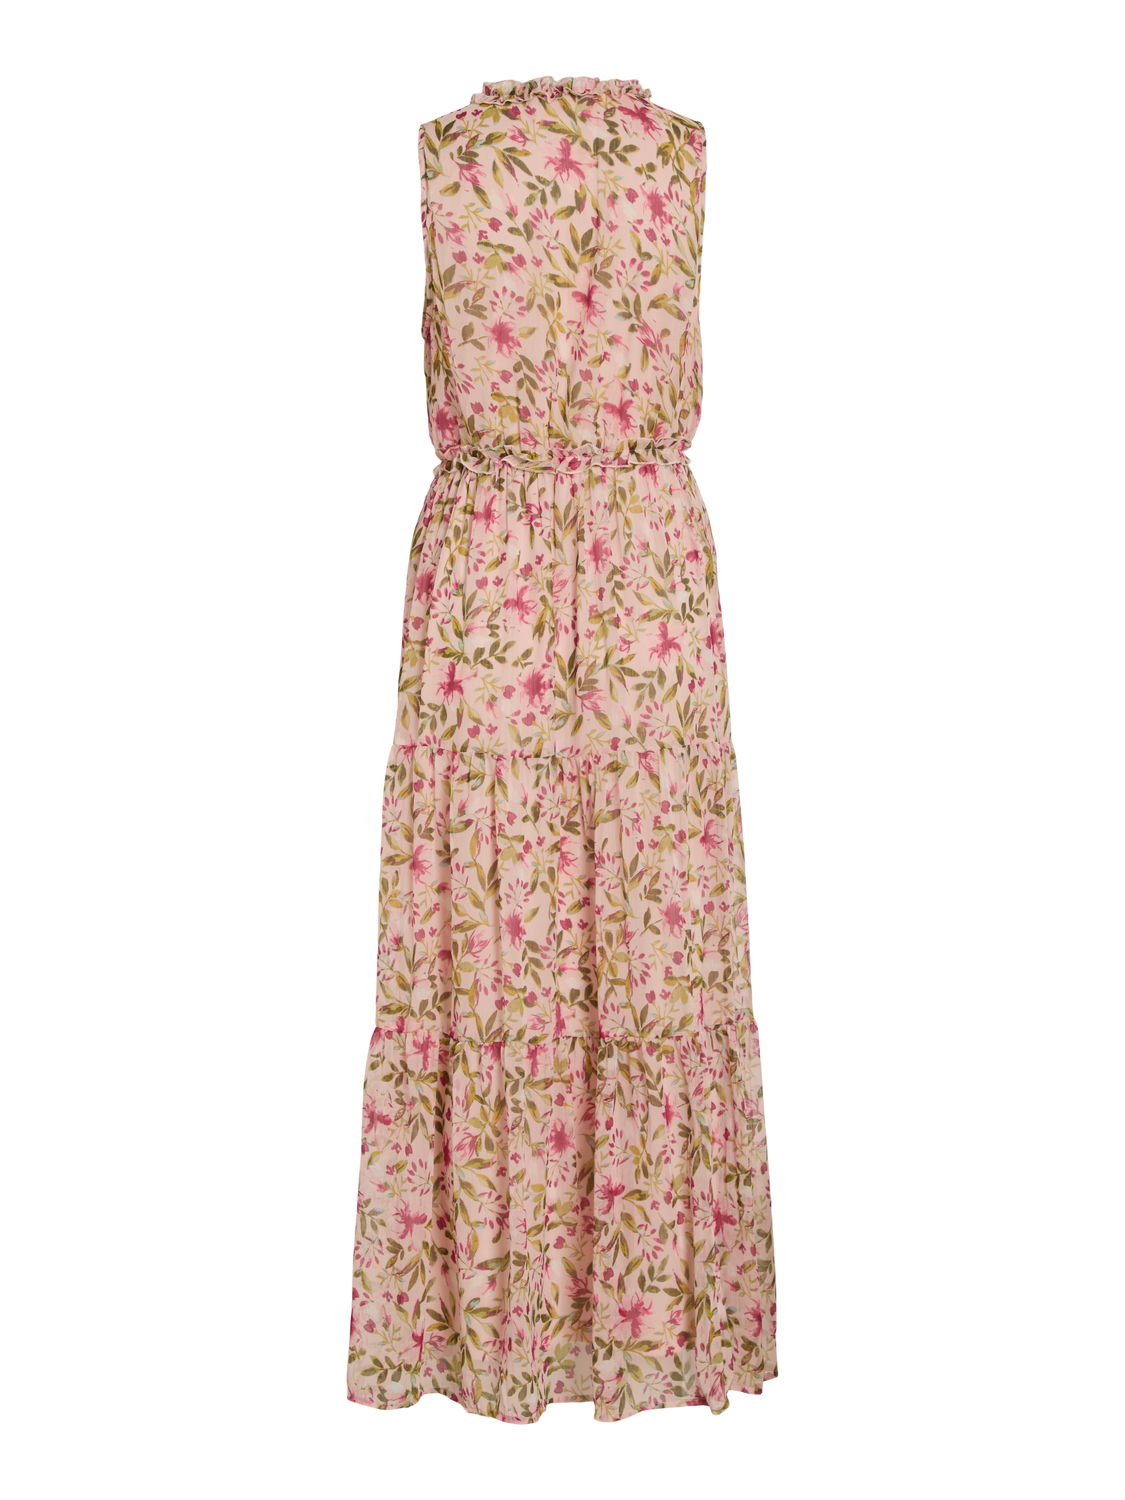 VIFALIA Dress - Silver Pink